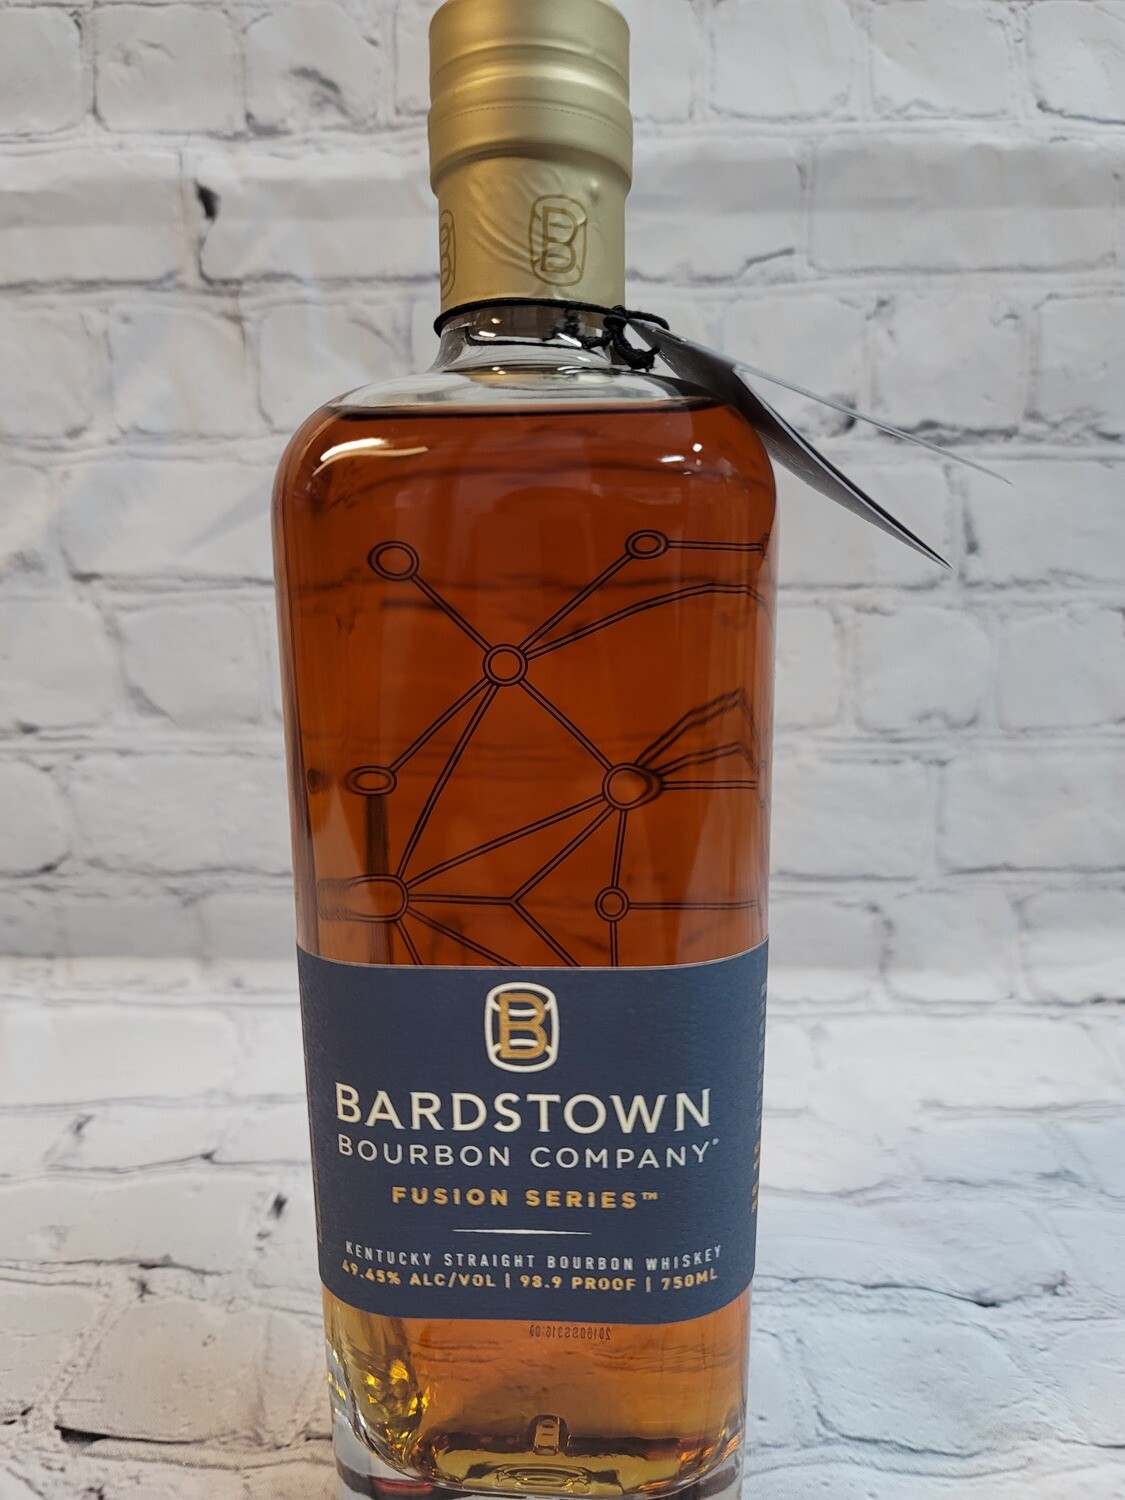 Bardstown Bourbon Company Fusion Series No. 3 750ml